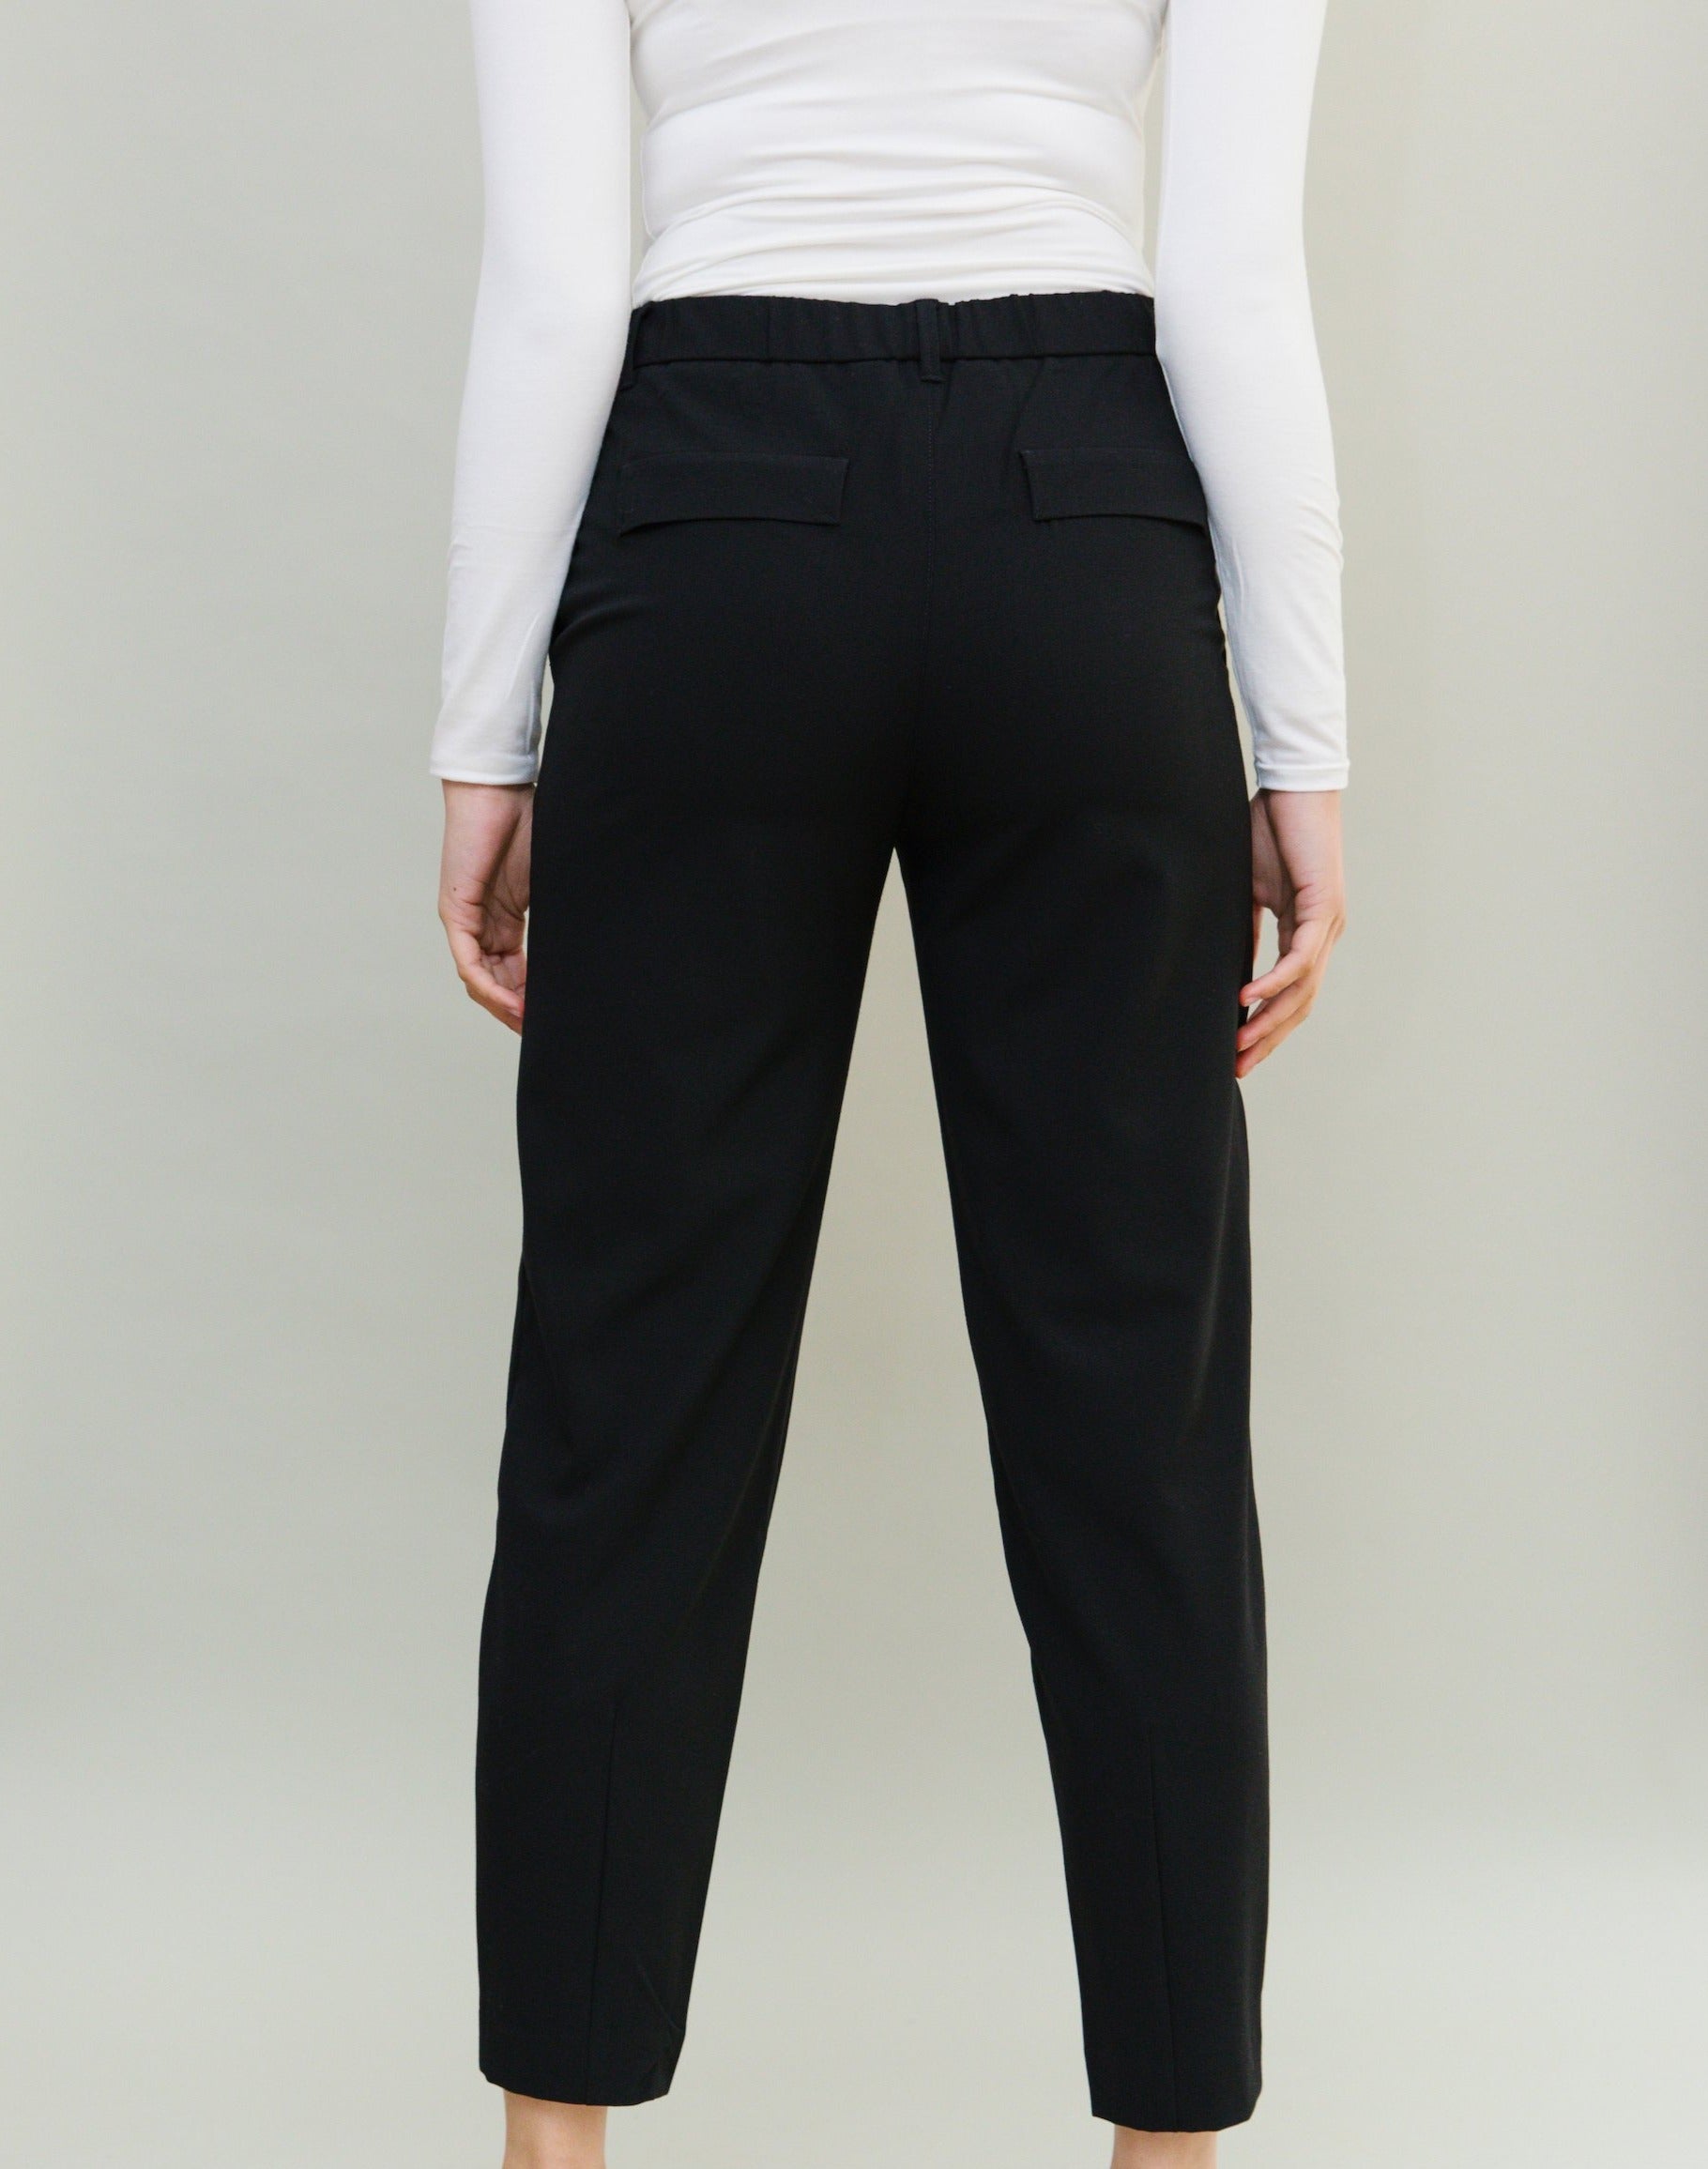 Modern Tapered Leg Black Trouser, elasticated waist, pockets and darted taper at hem